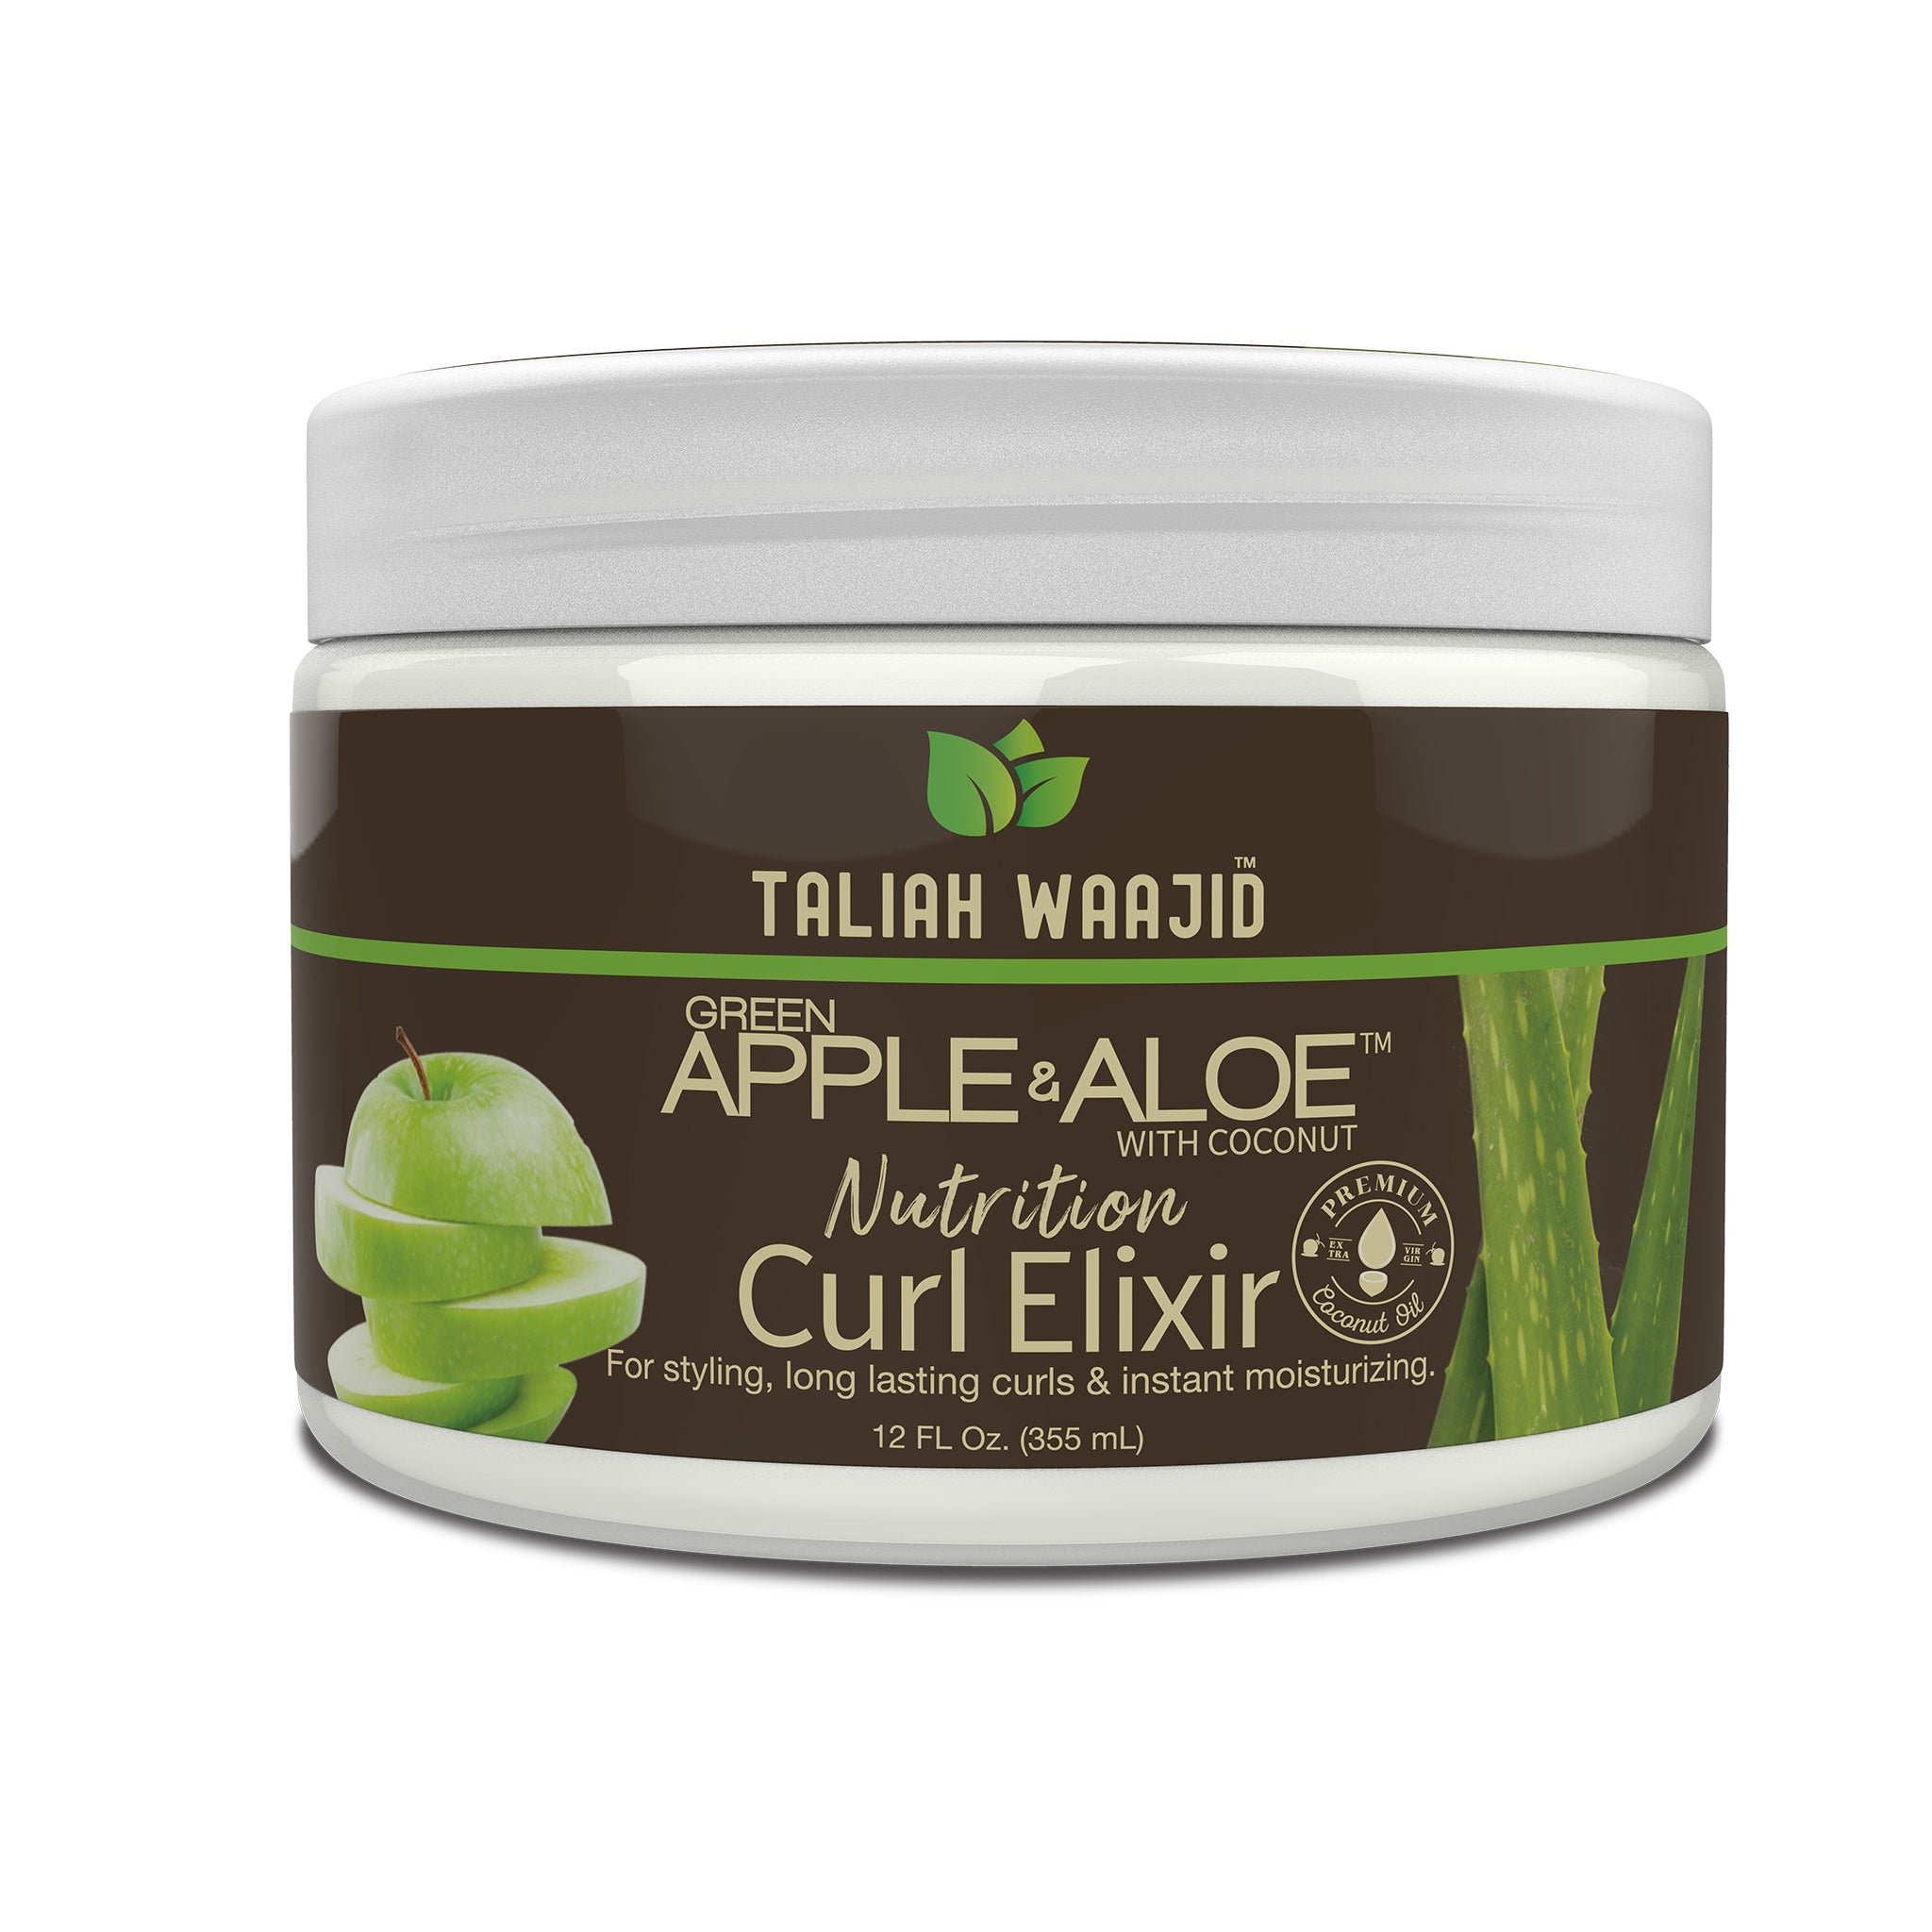 Taliah Waajid Green Apple & Aloe Nutrition Curl Elixir 12oz